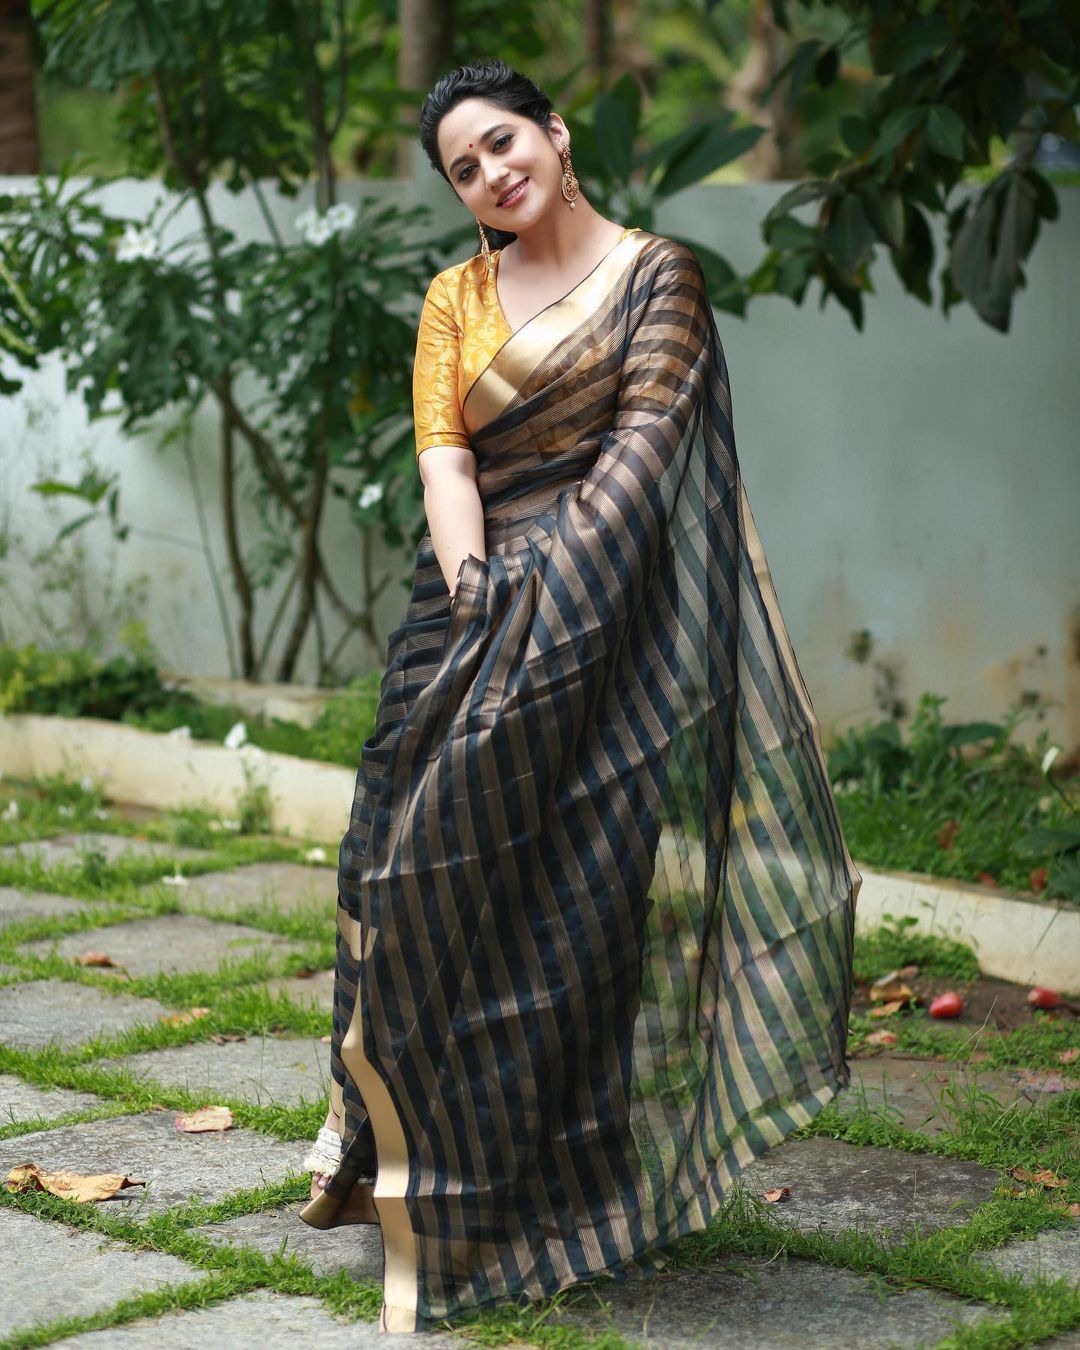 malayalam actress miya george stills in black saree yellow blouse